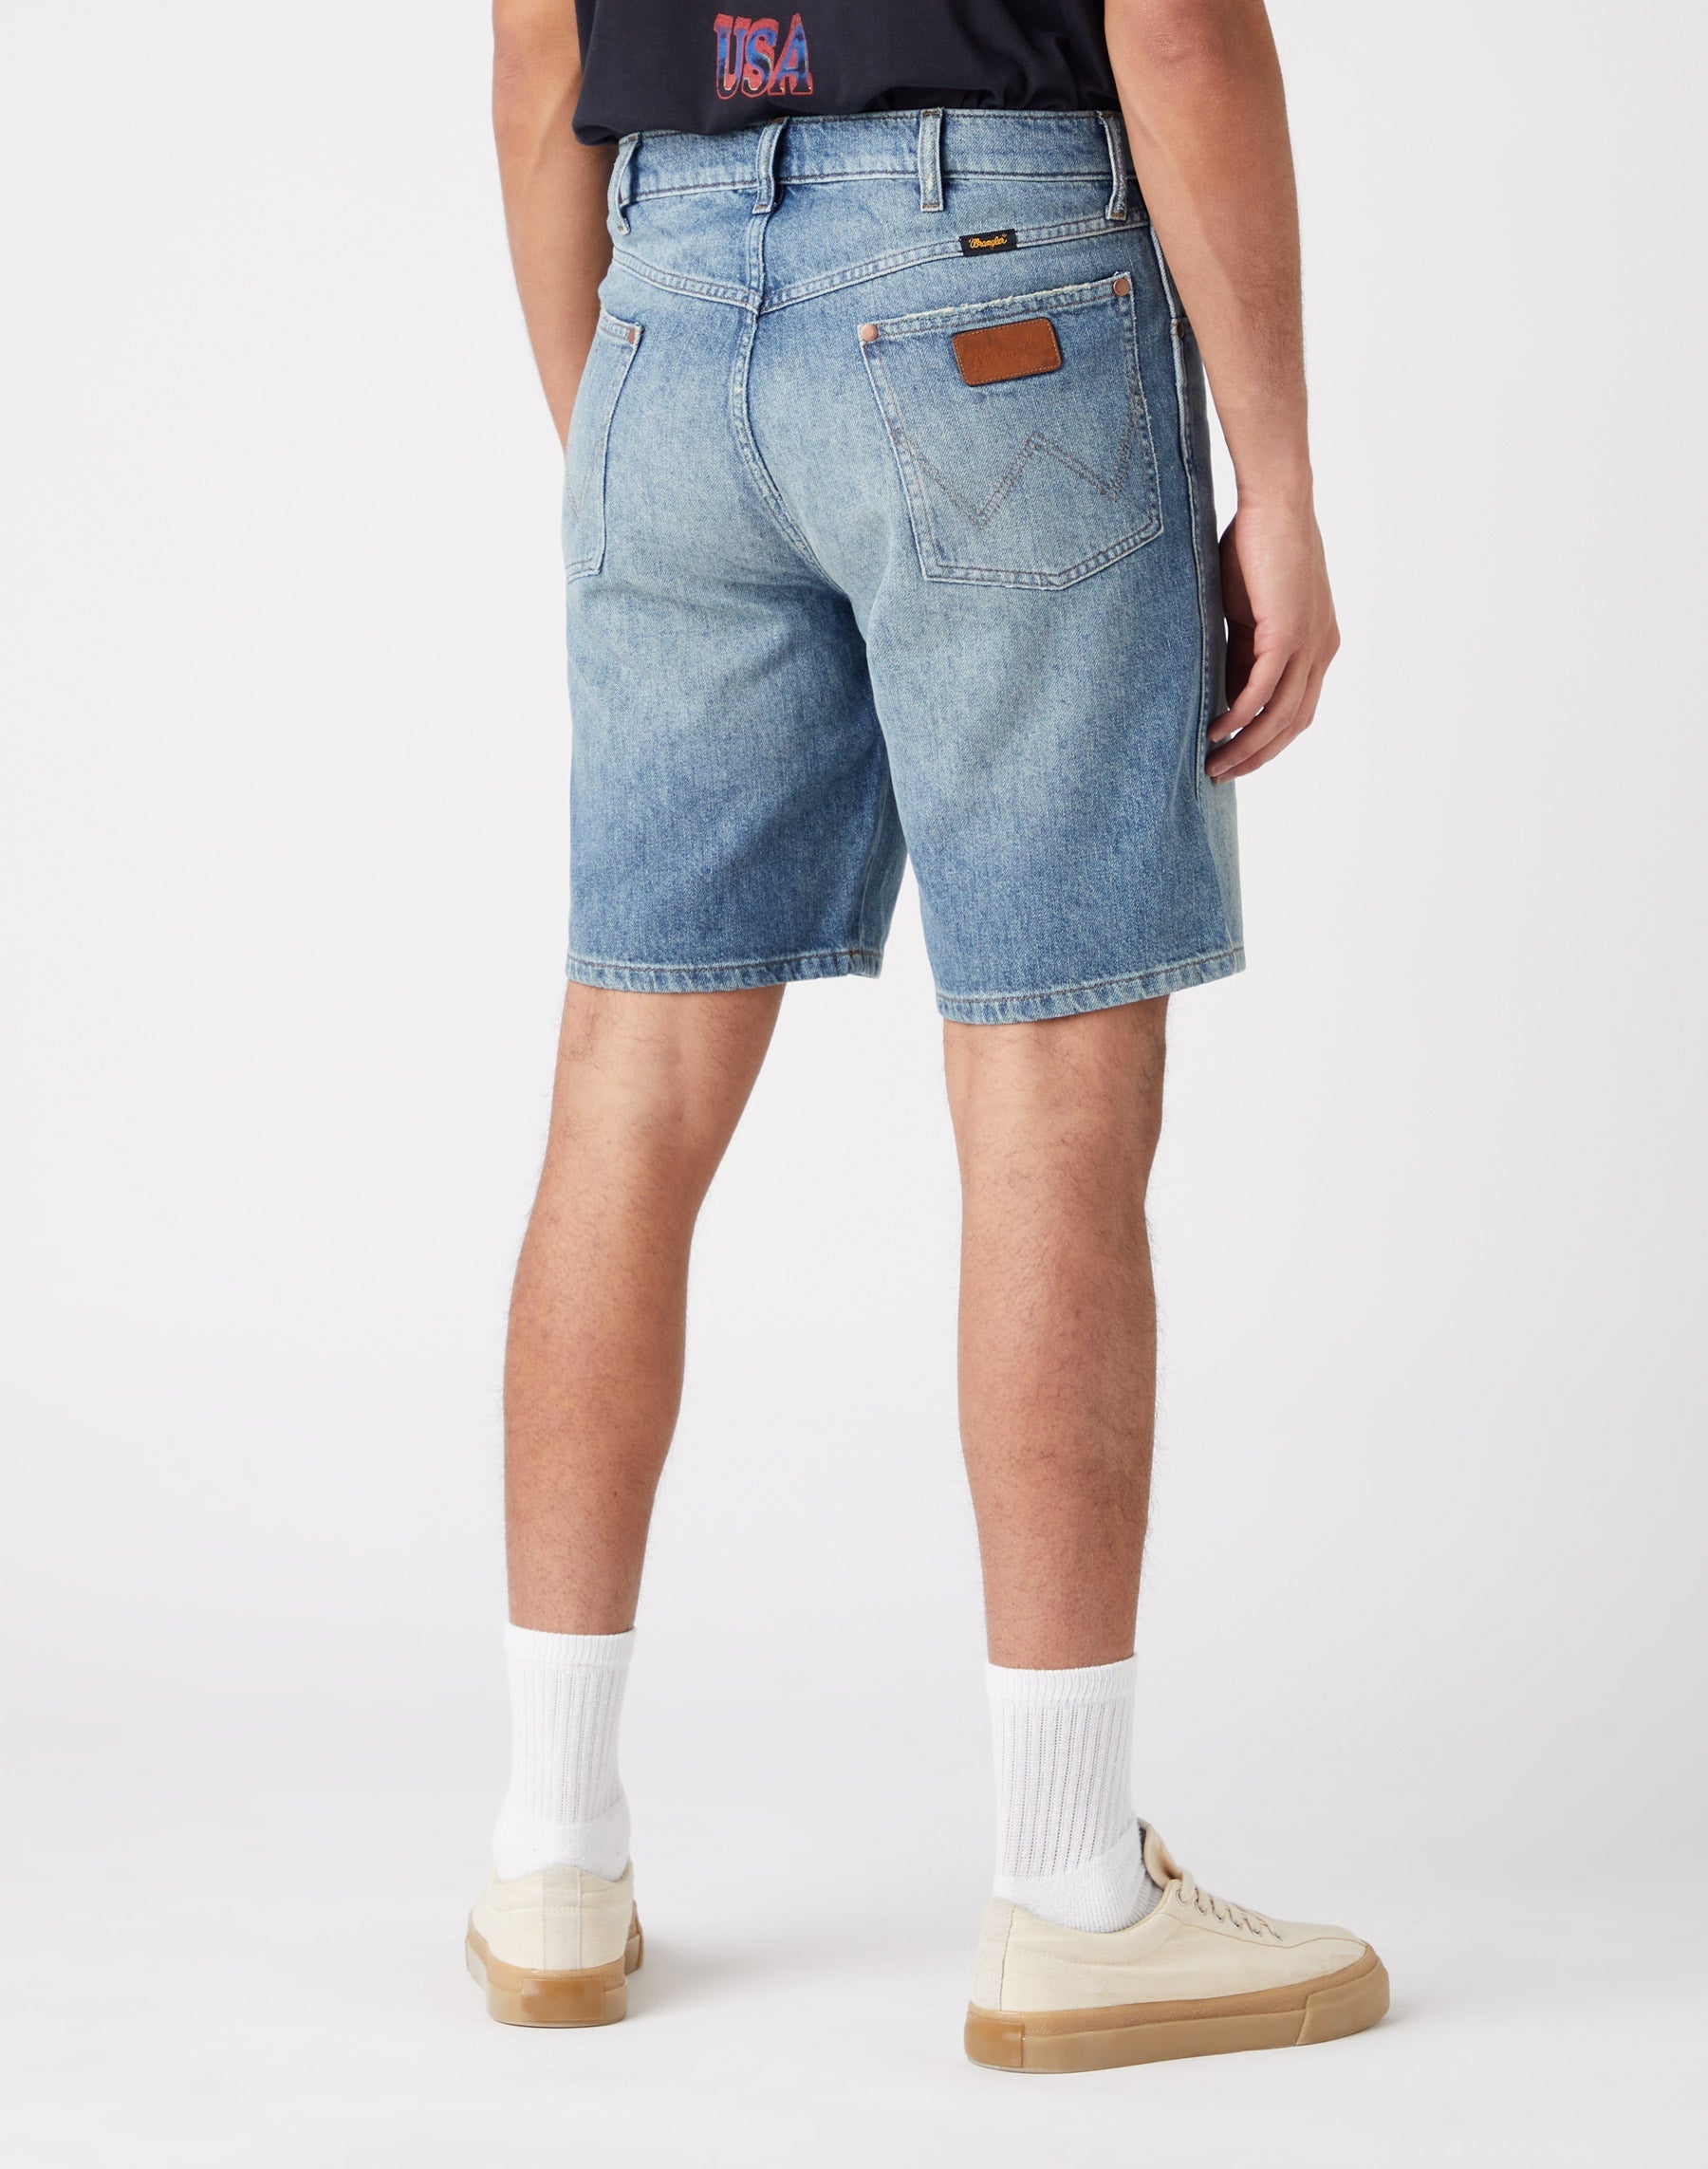 Redding Shorts in Clear Blue Jeansshorts Wrangler   